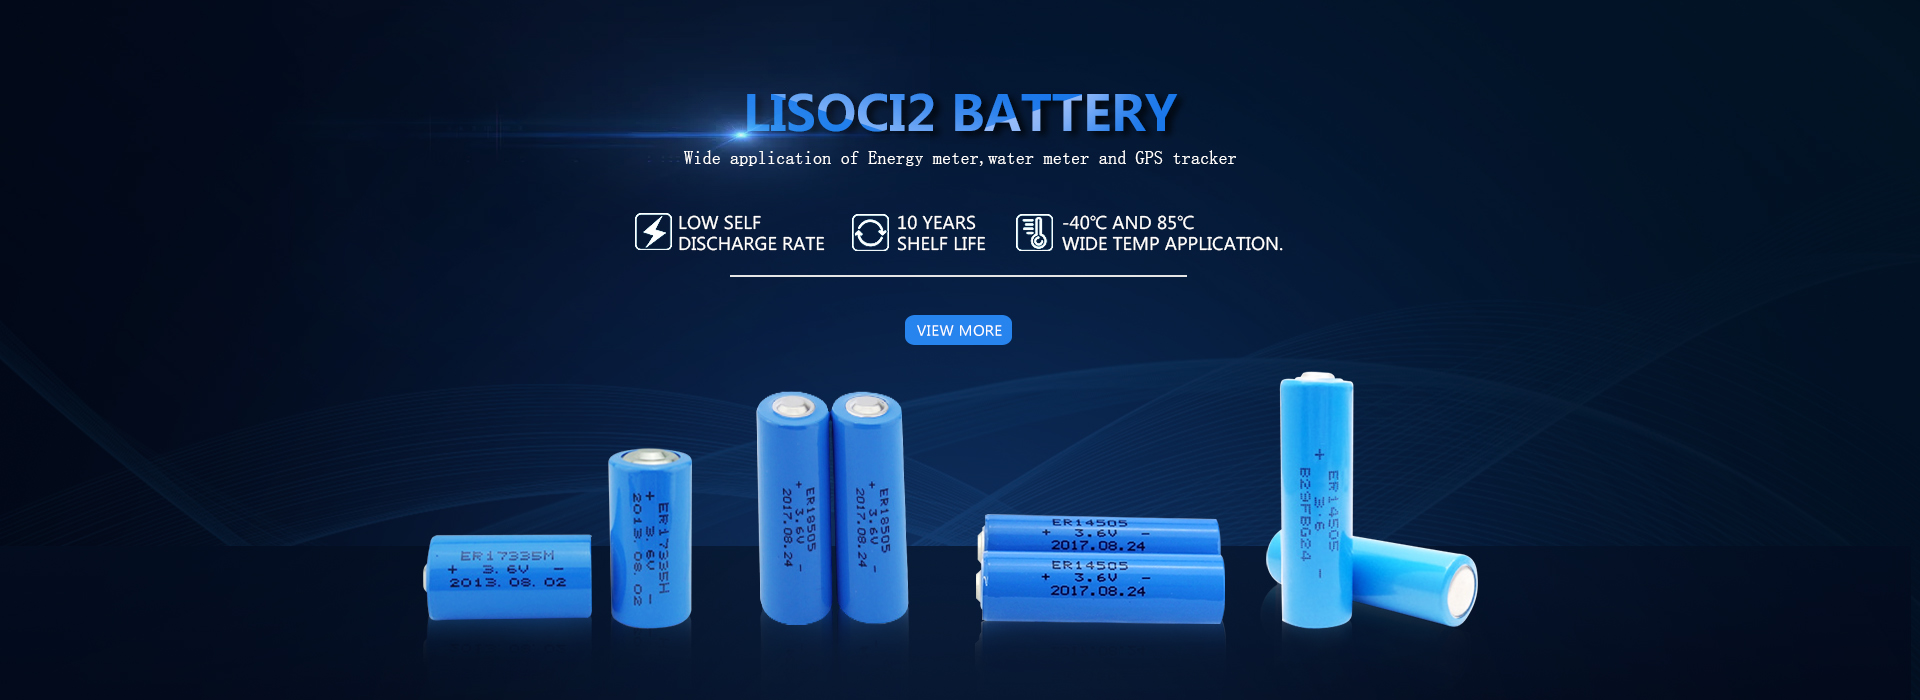 LiSoci2-valmistajat